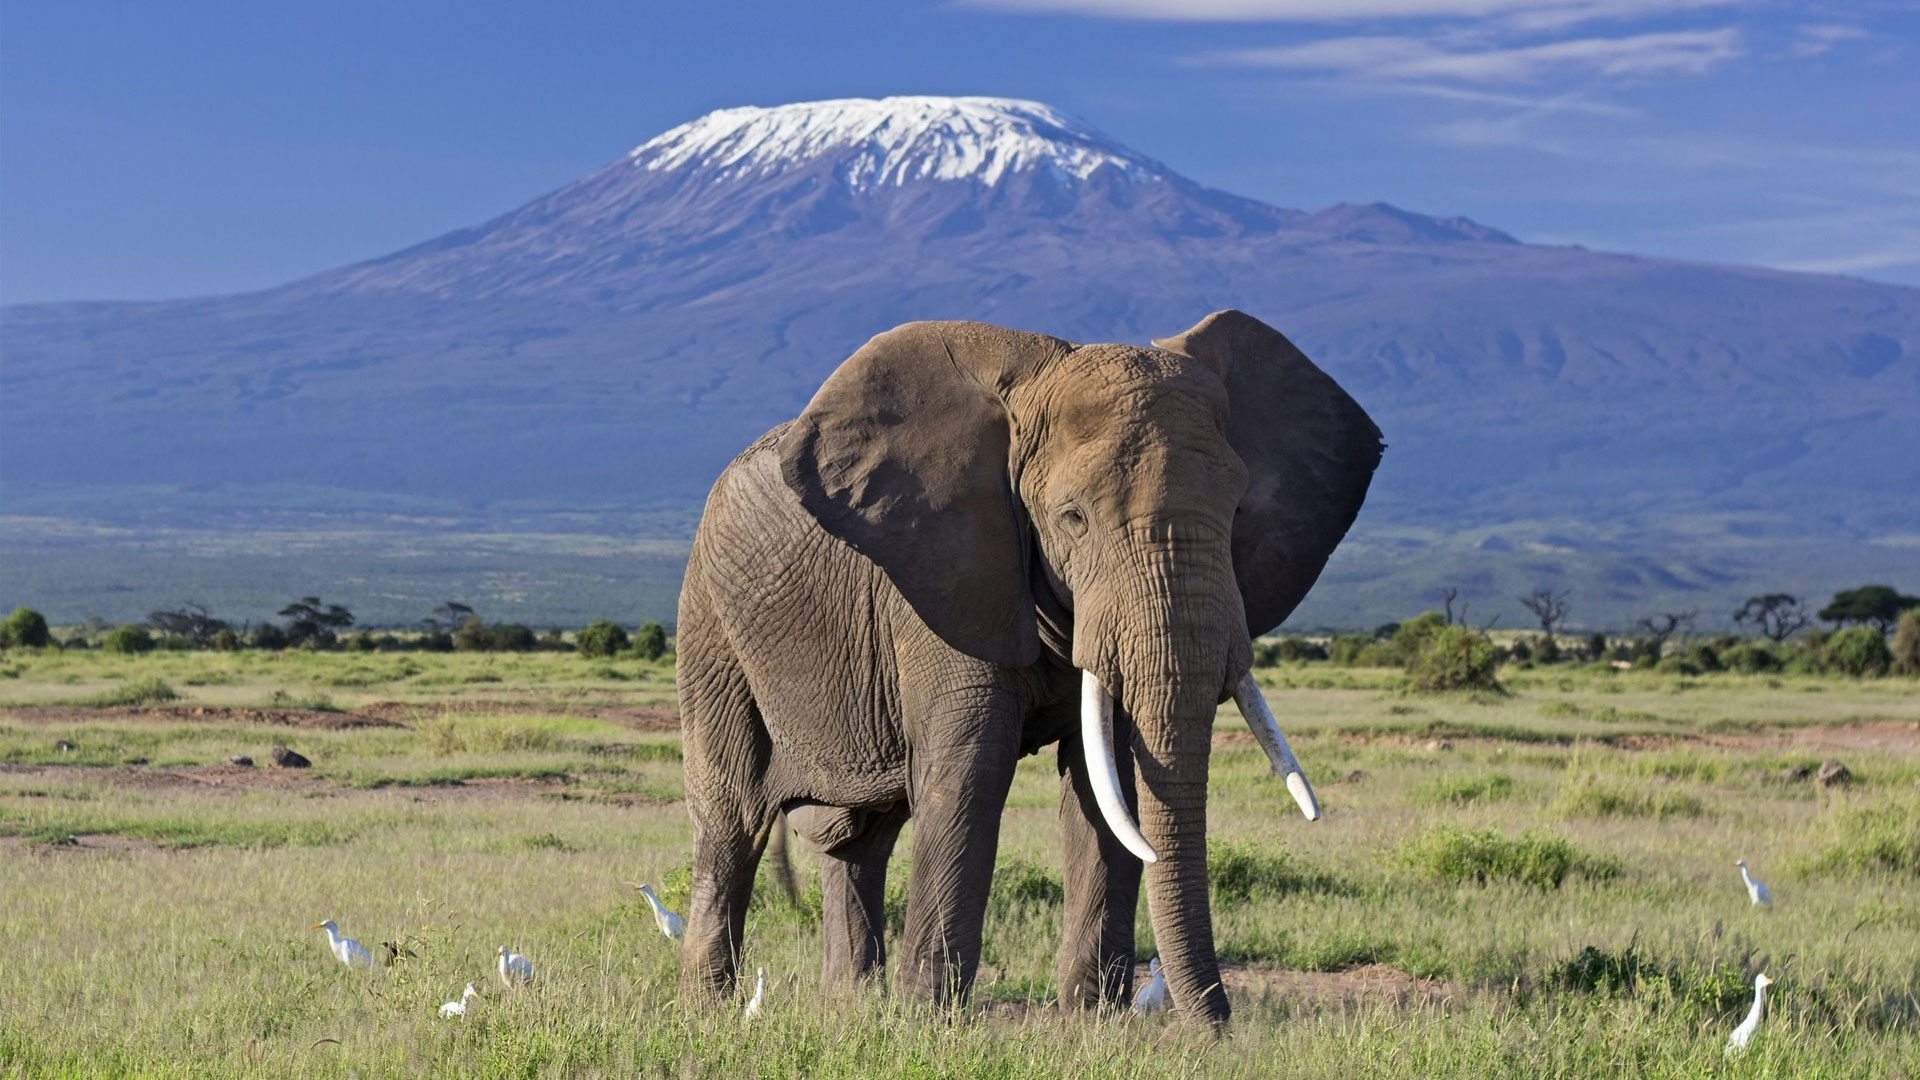 Elephants in Amboseli National Park Kenya